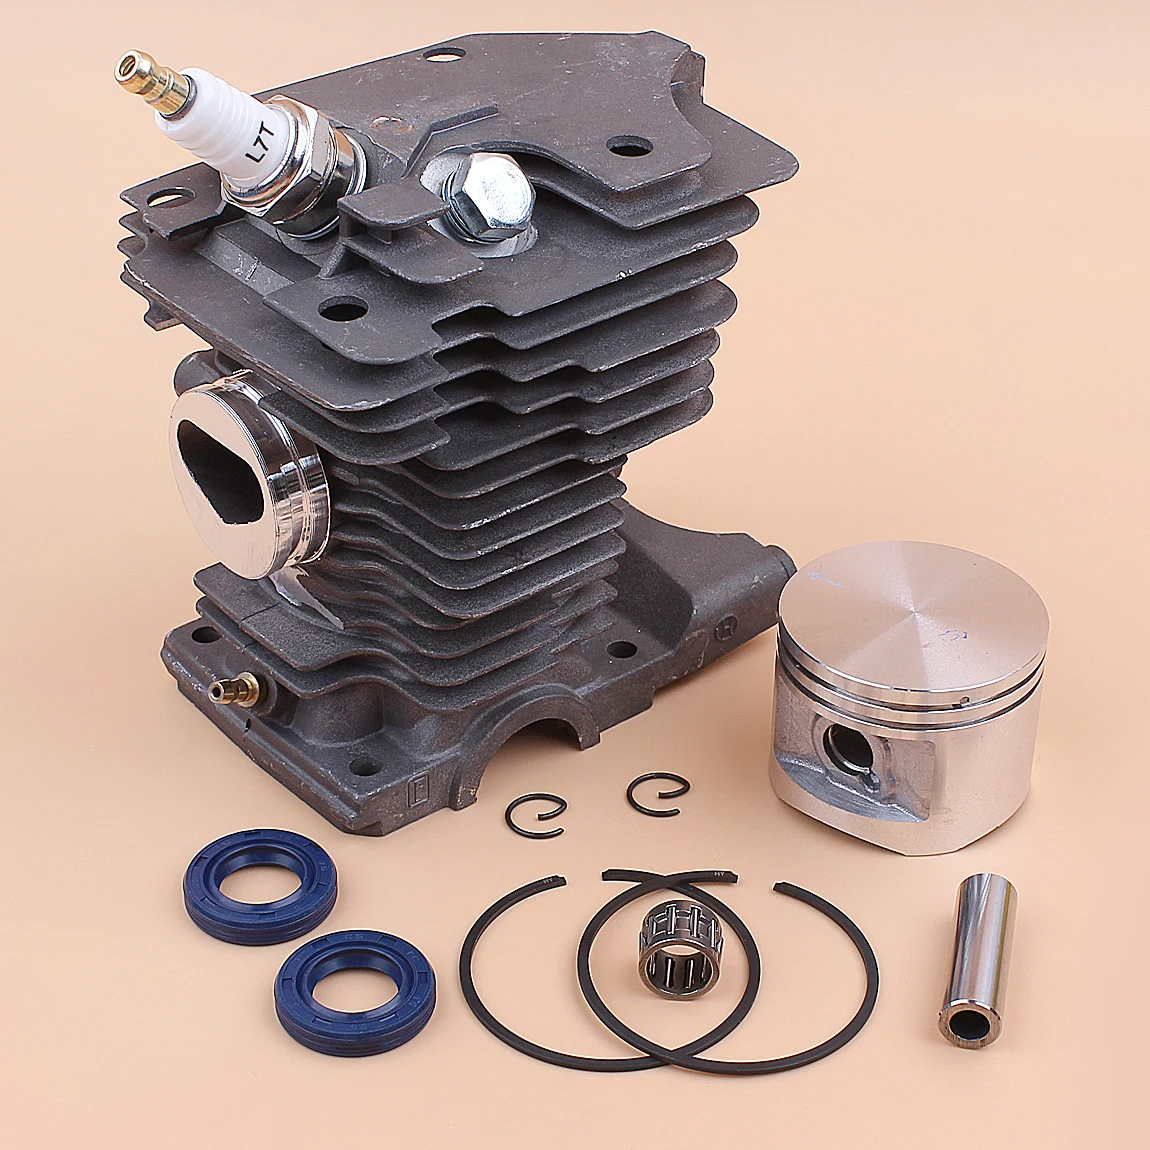 Cylinder Piston Set,46mm Cylinder Piston Air Filter Oil Seals Pressure Relief Valve Set for MS270 MS280 Chainsaw 